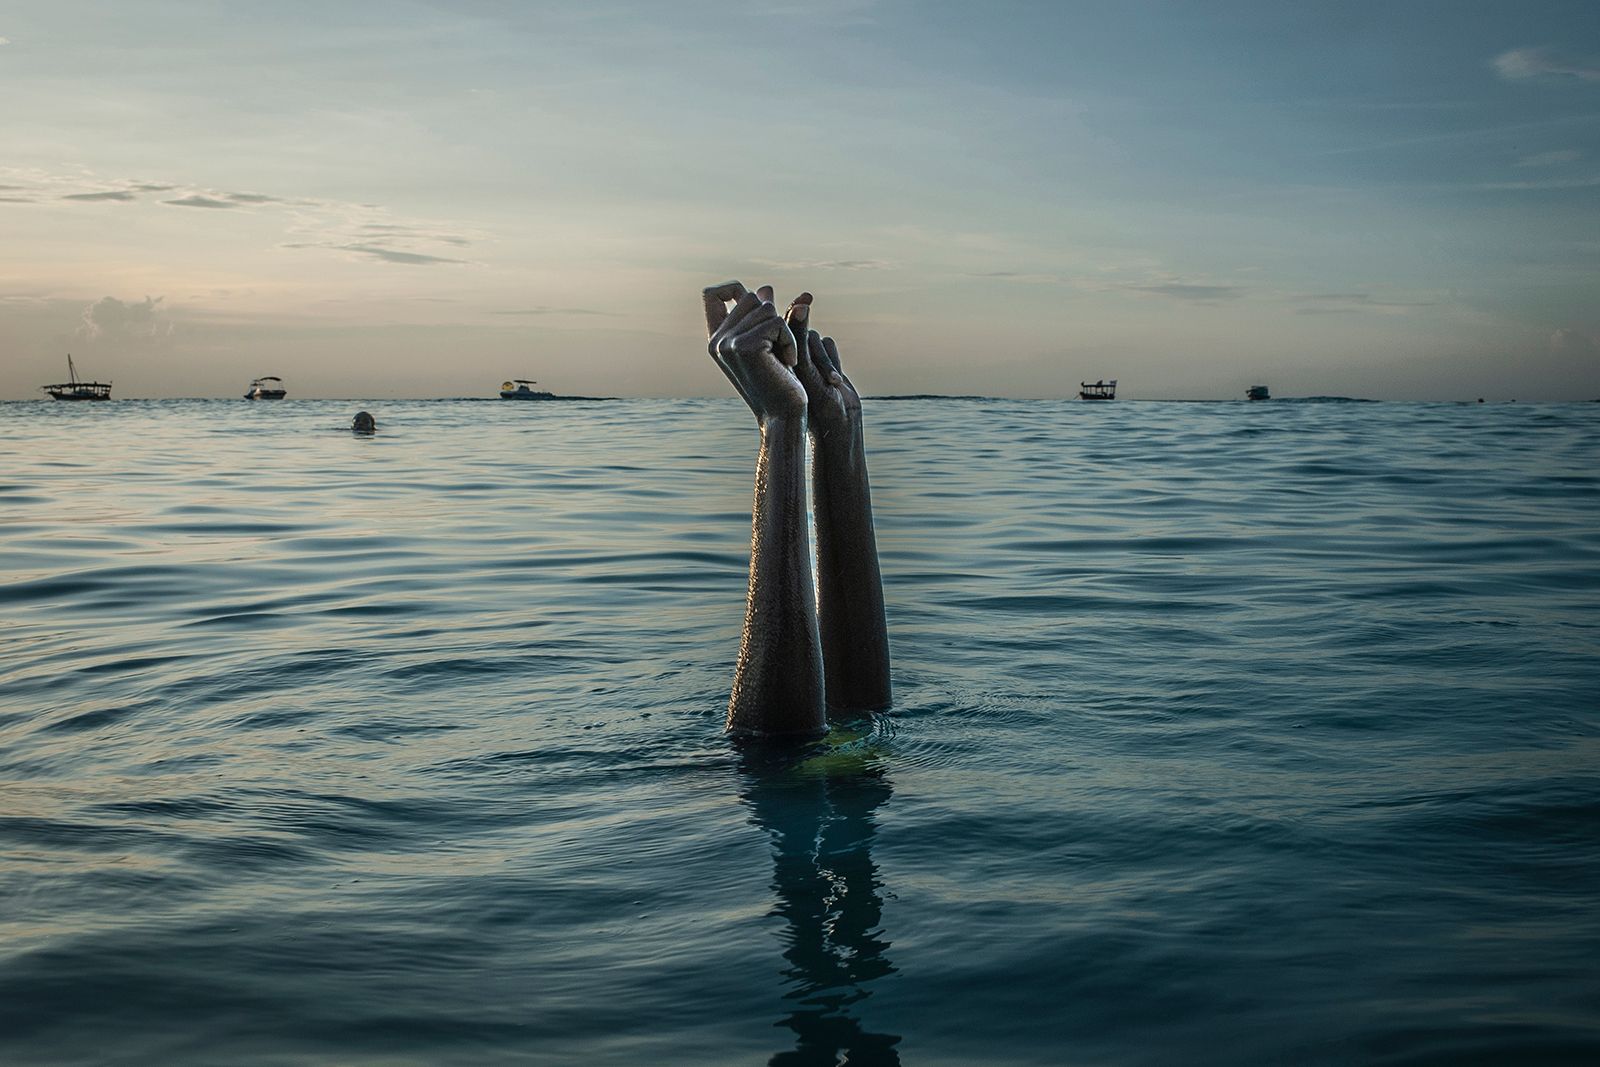 © Anna Boyiazis - Swim instructor Chema, 17, snaps her fingers as she disappears underwater in Nungwi, Zanzibar.